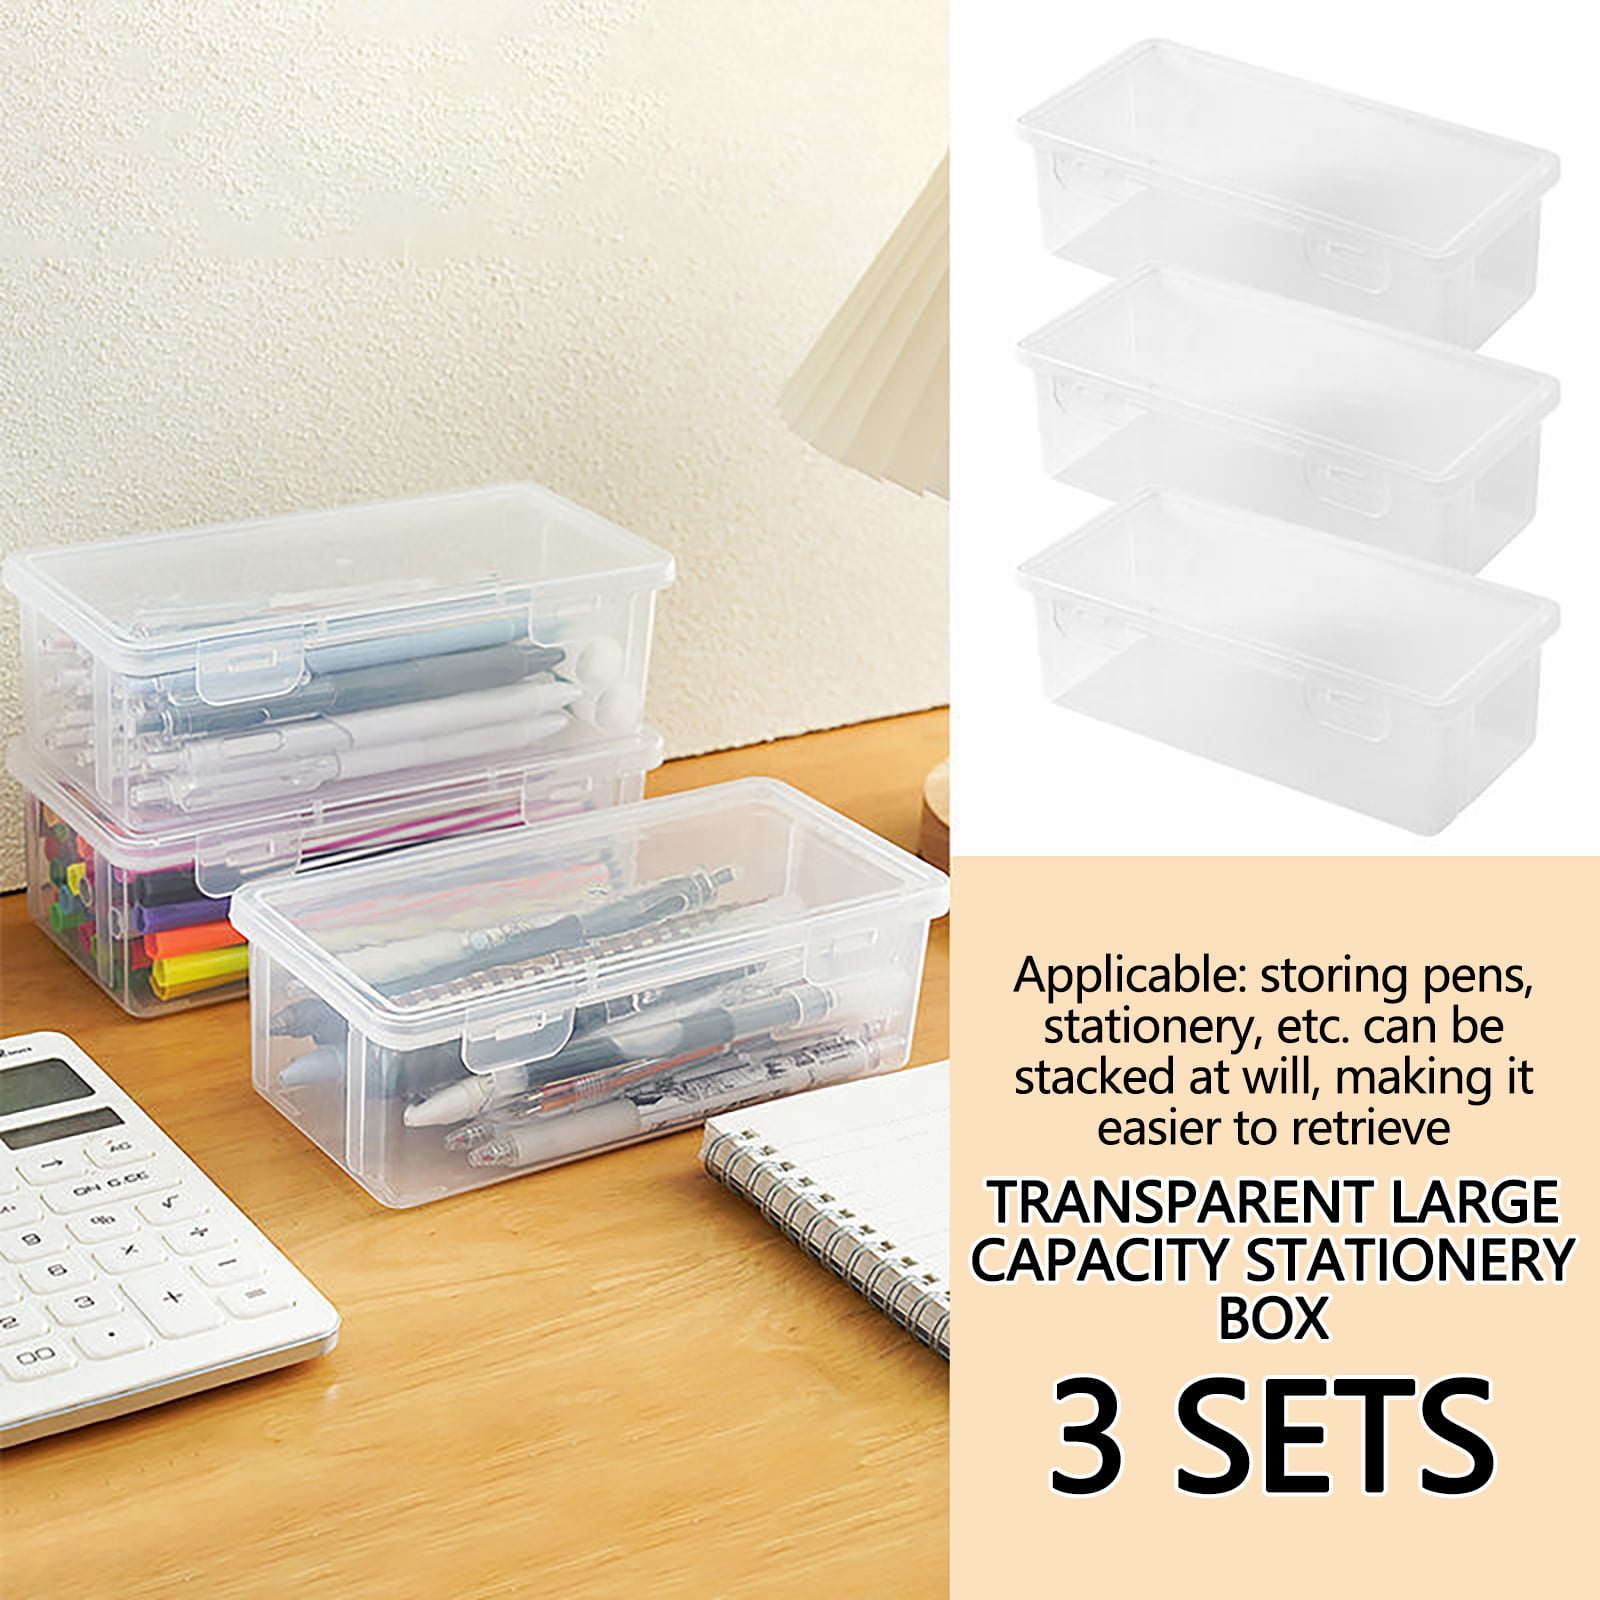 Hard Plastic Pencil Box - BMRI 036 - IdeaStage Promotional Products